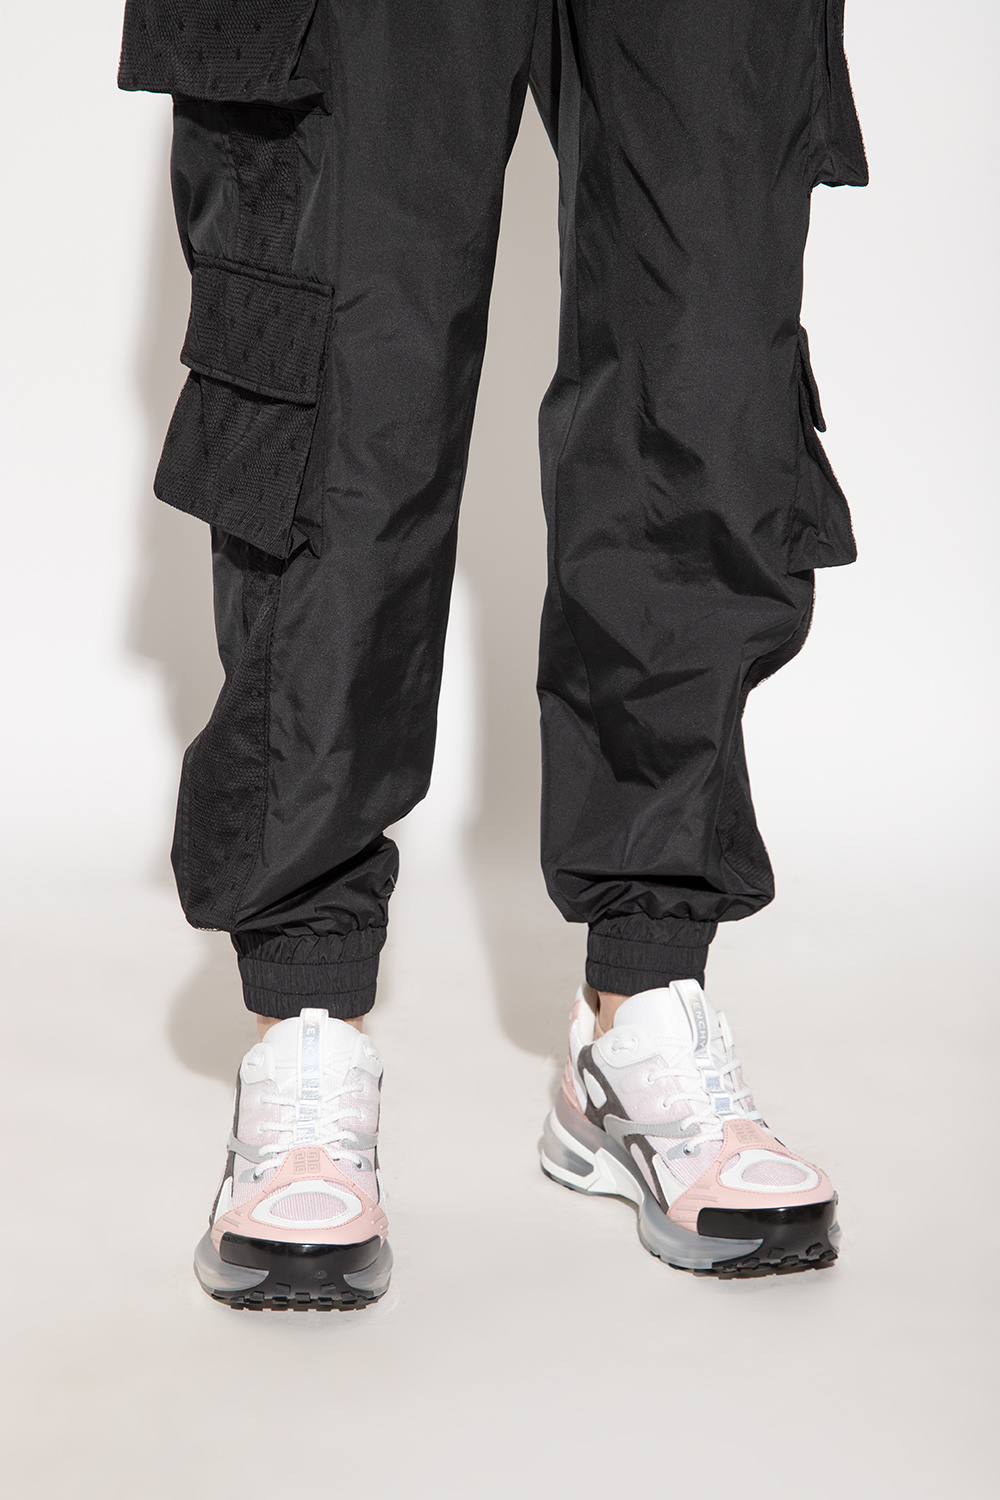 Givenchy x Josh Smith City Sport Sneaker (Men)